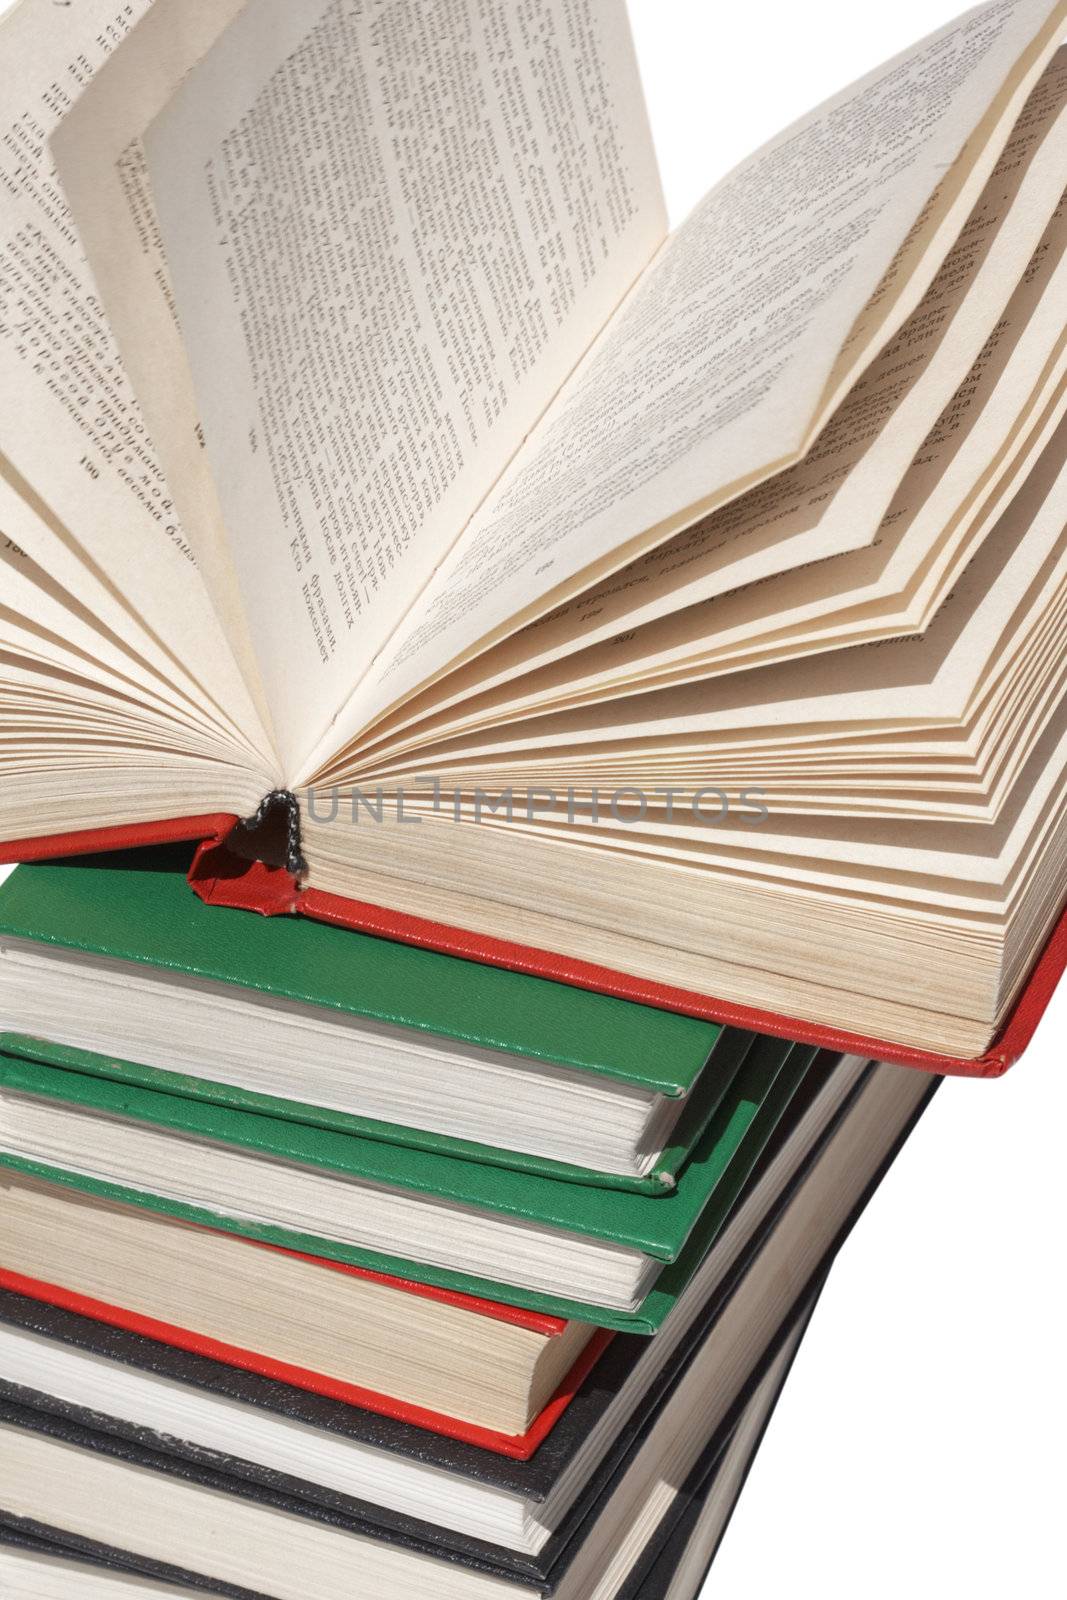 Education. Pile of books by petrkurgan